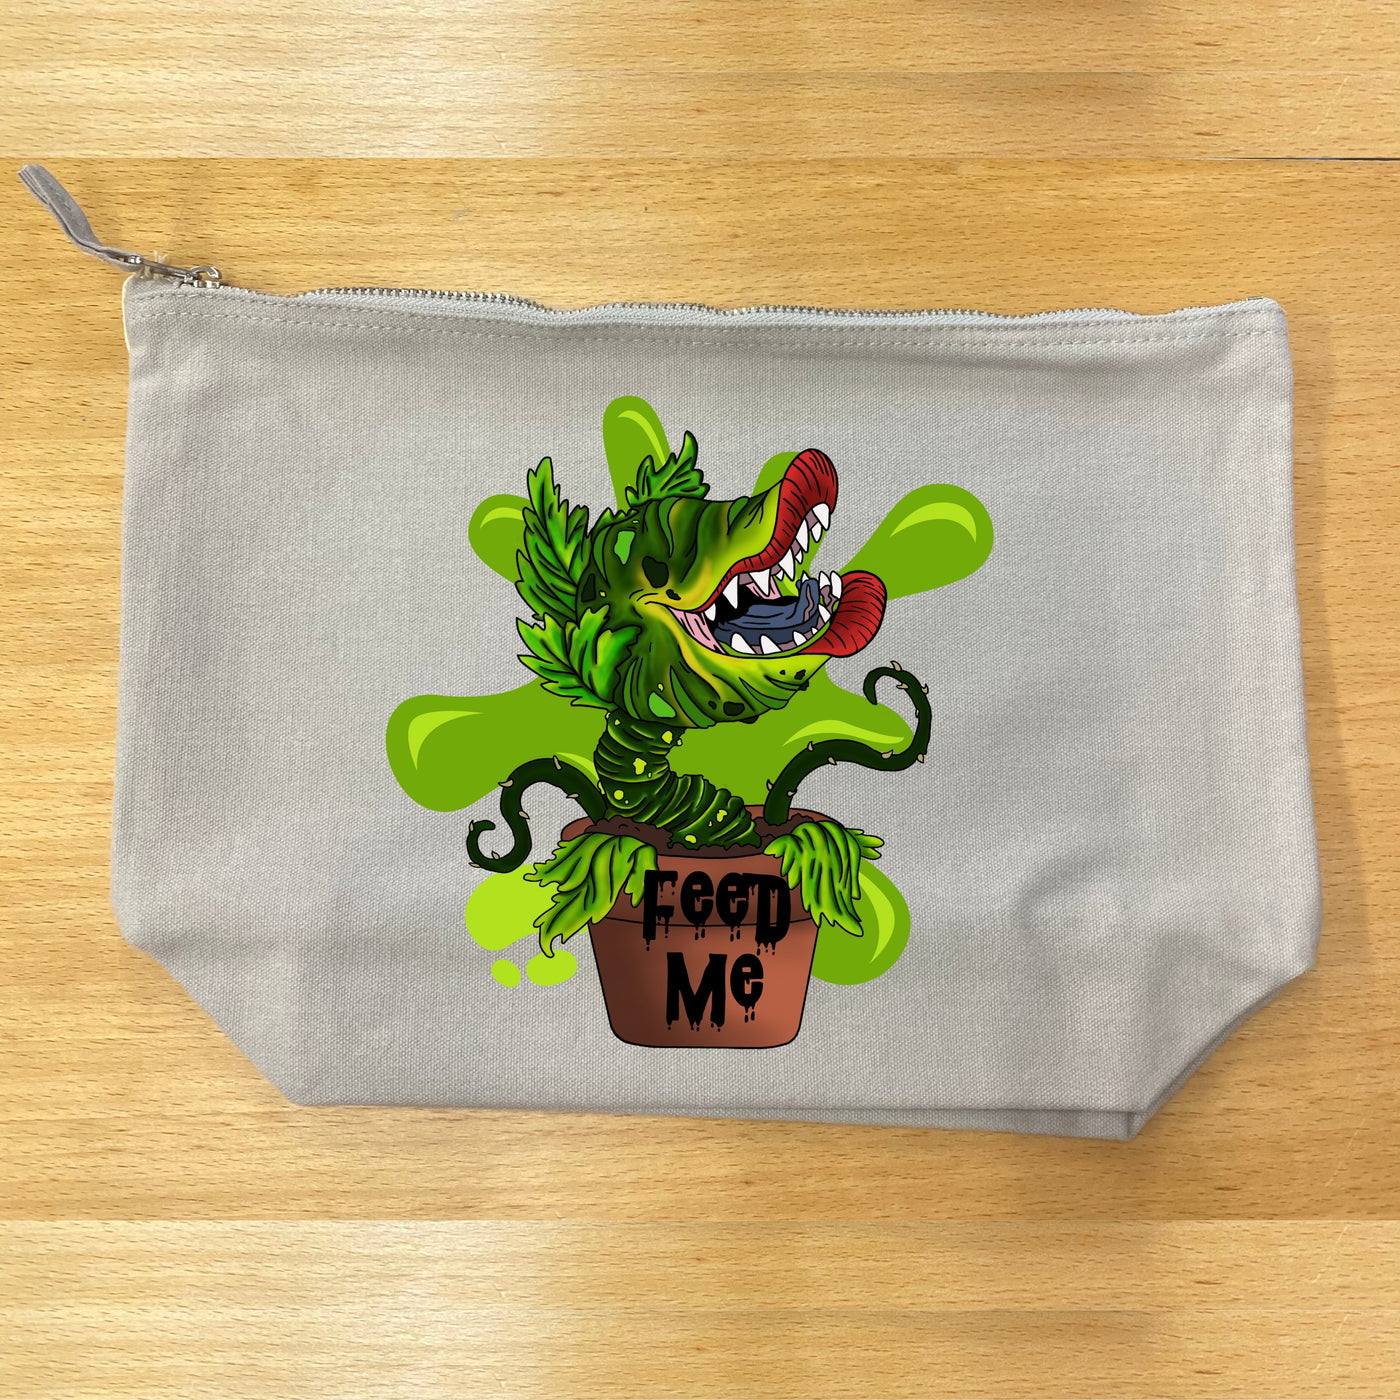 "Feed Me" Accessory Bag